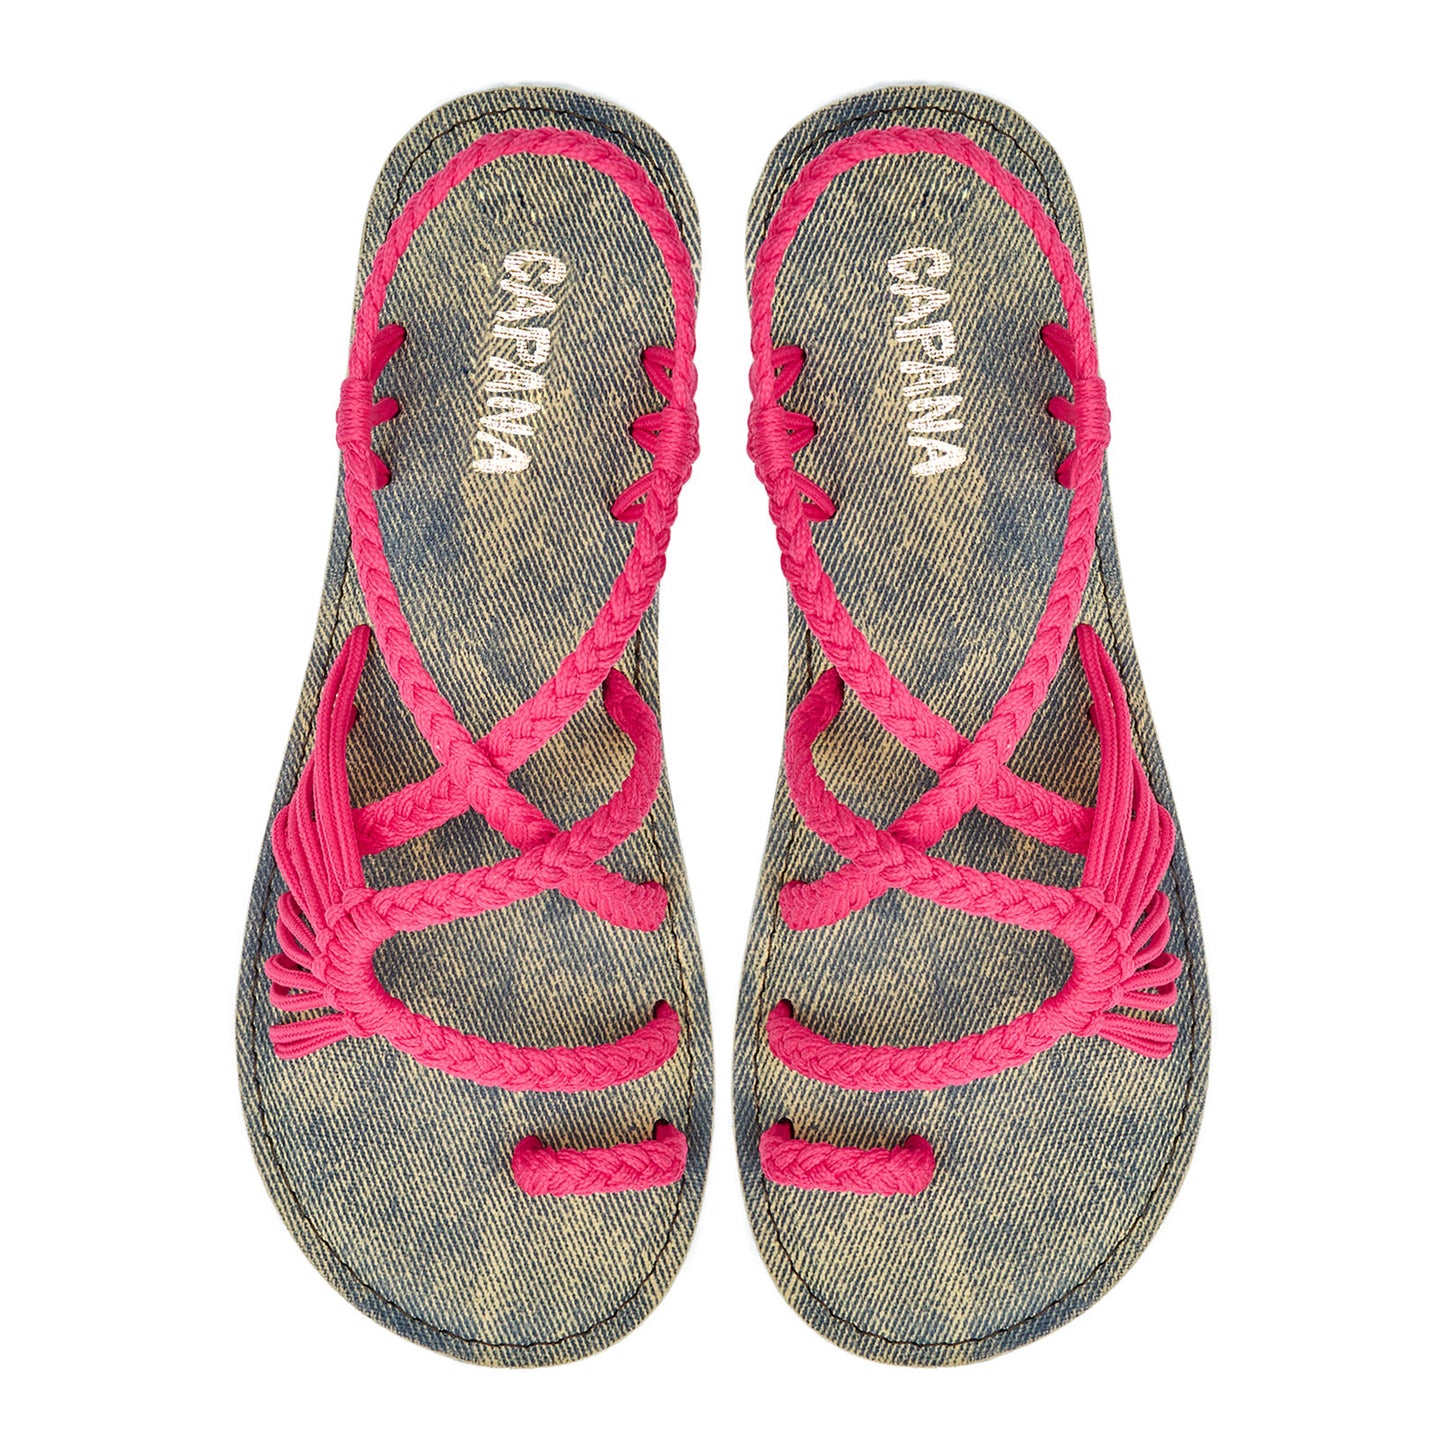 Commune Pink Jeans Rope Sandals Flamingo loop design Flat sandals for women